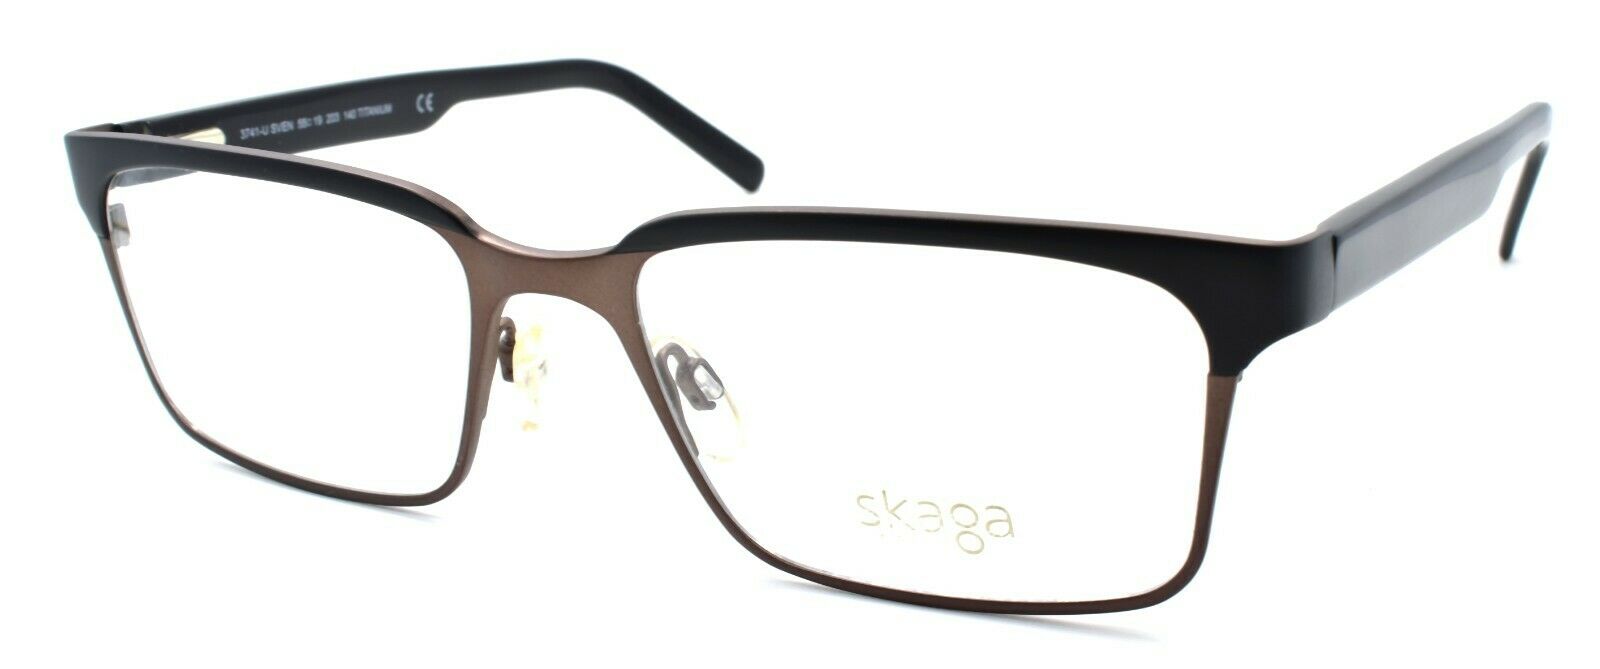 1-Skaga 3741-U Sven 203 Men's Eyeglasses Frames TITANIUM 55-19-140 Brown ITALY-IKSpecs